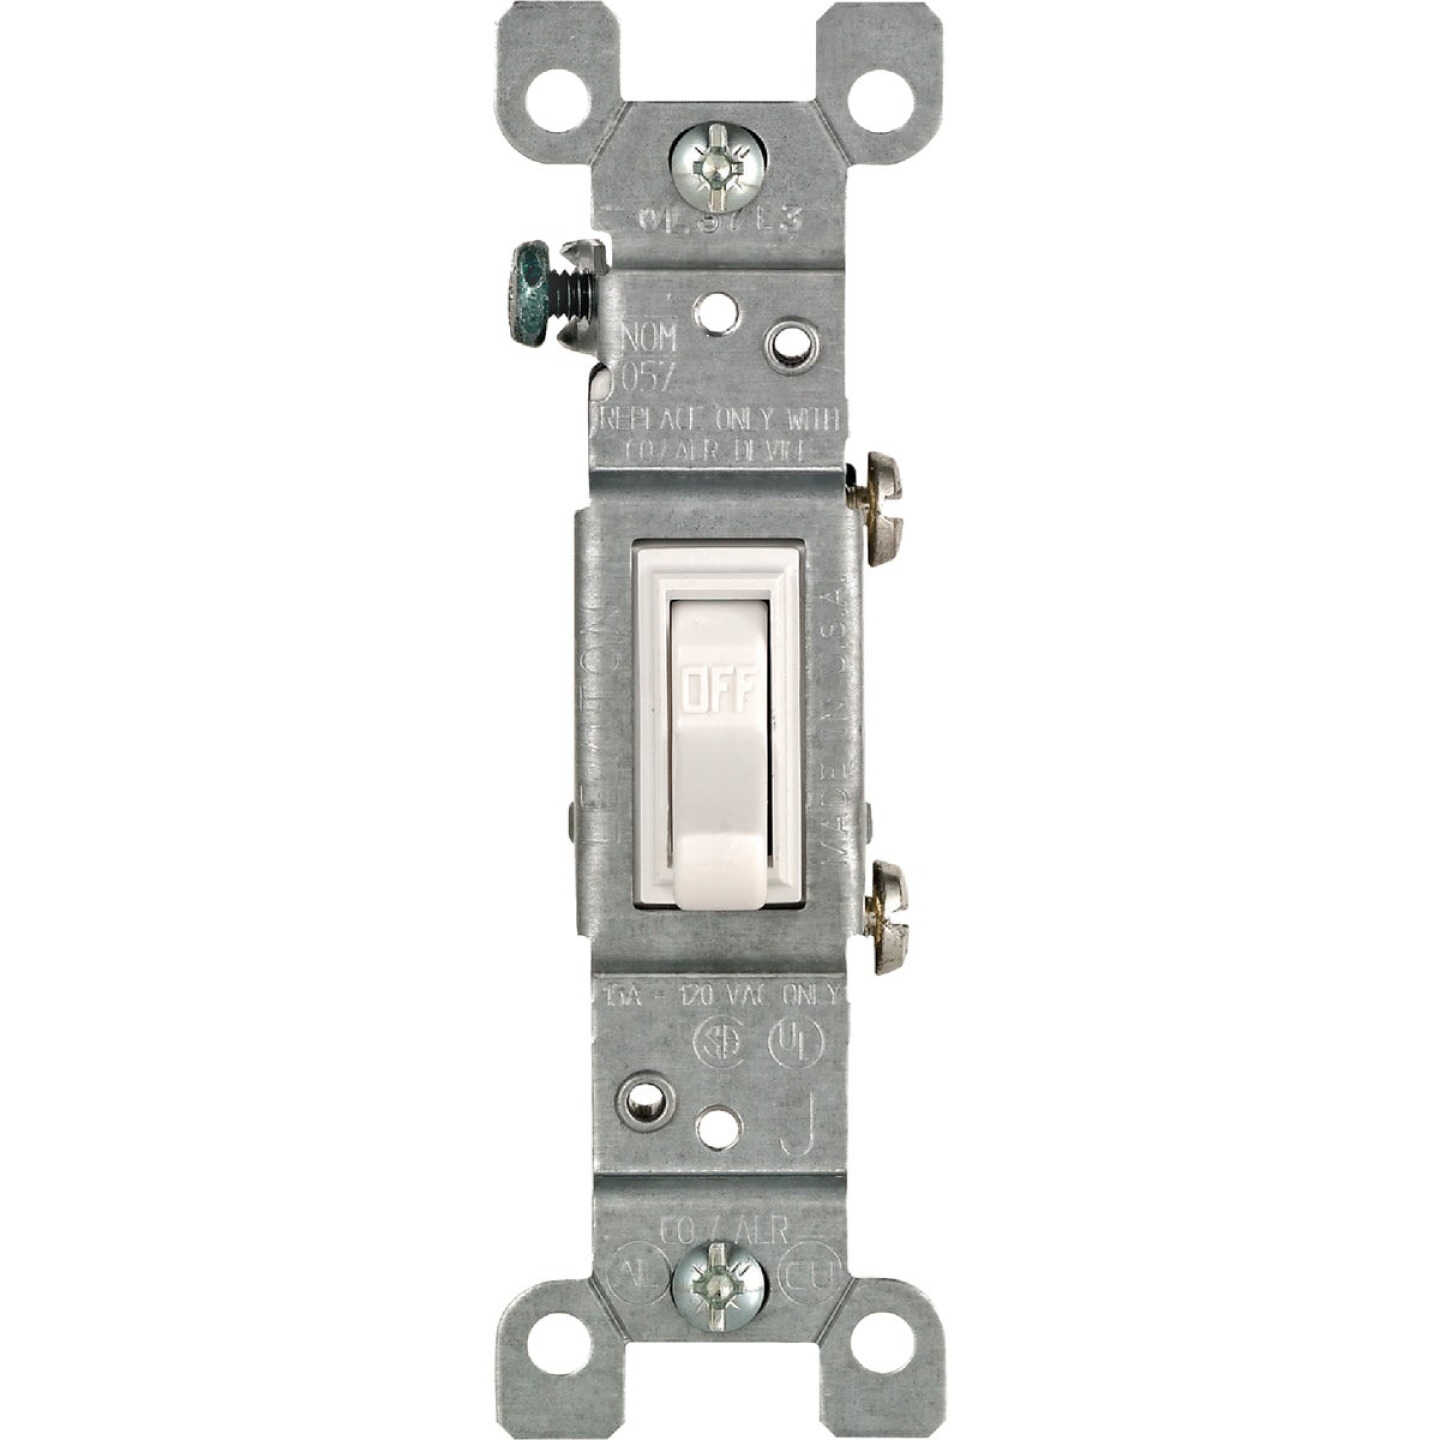 Leviton Residential Grade 15 Amp Toggle Single Pole Switch, White Image 1